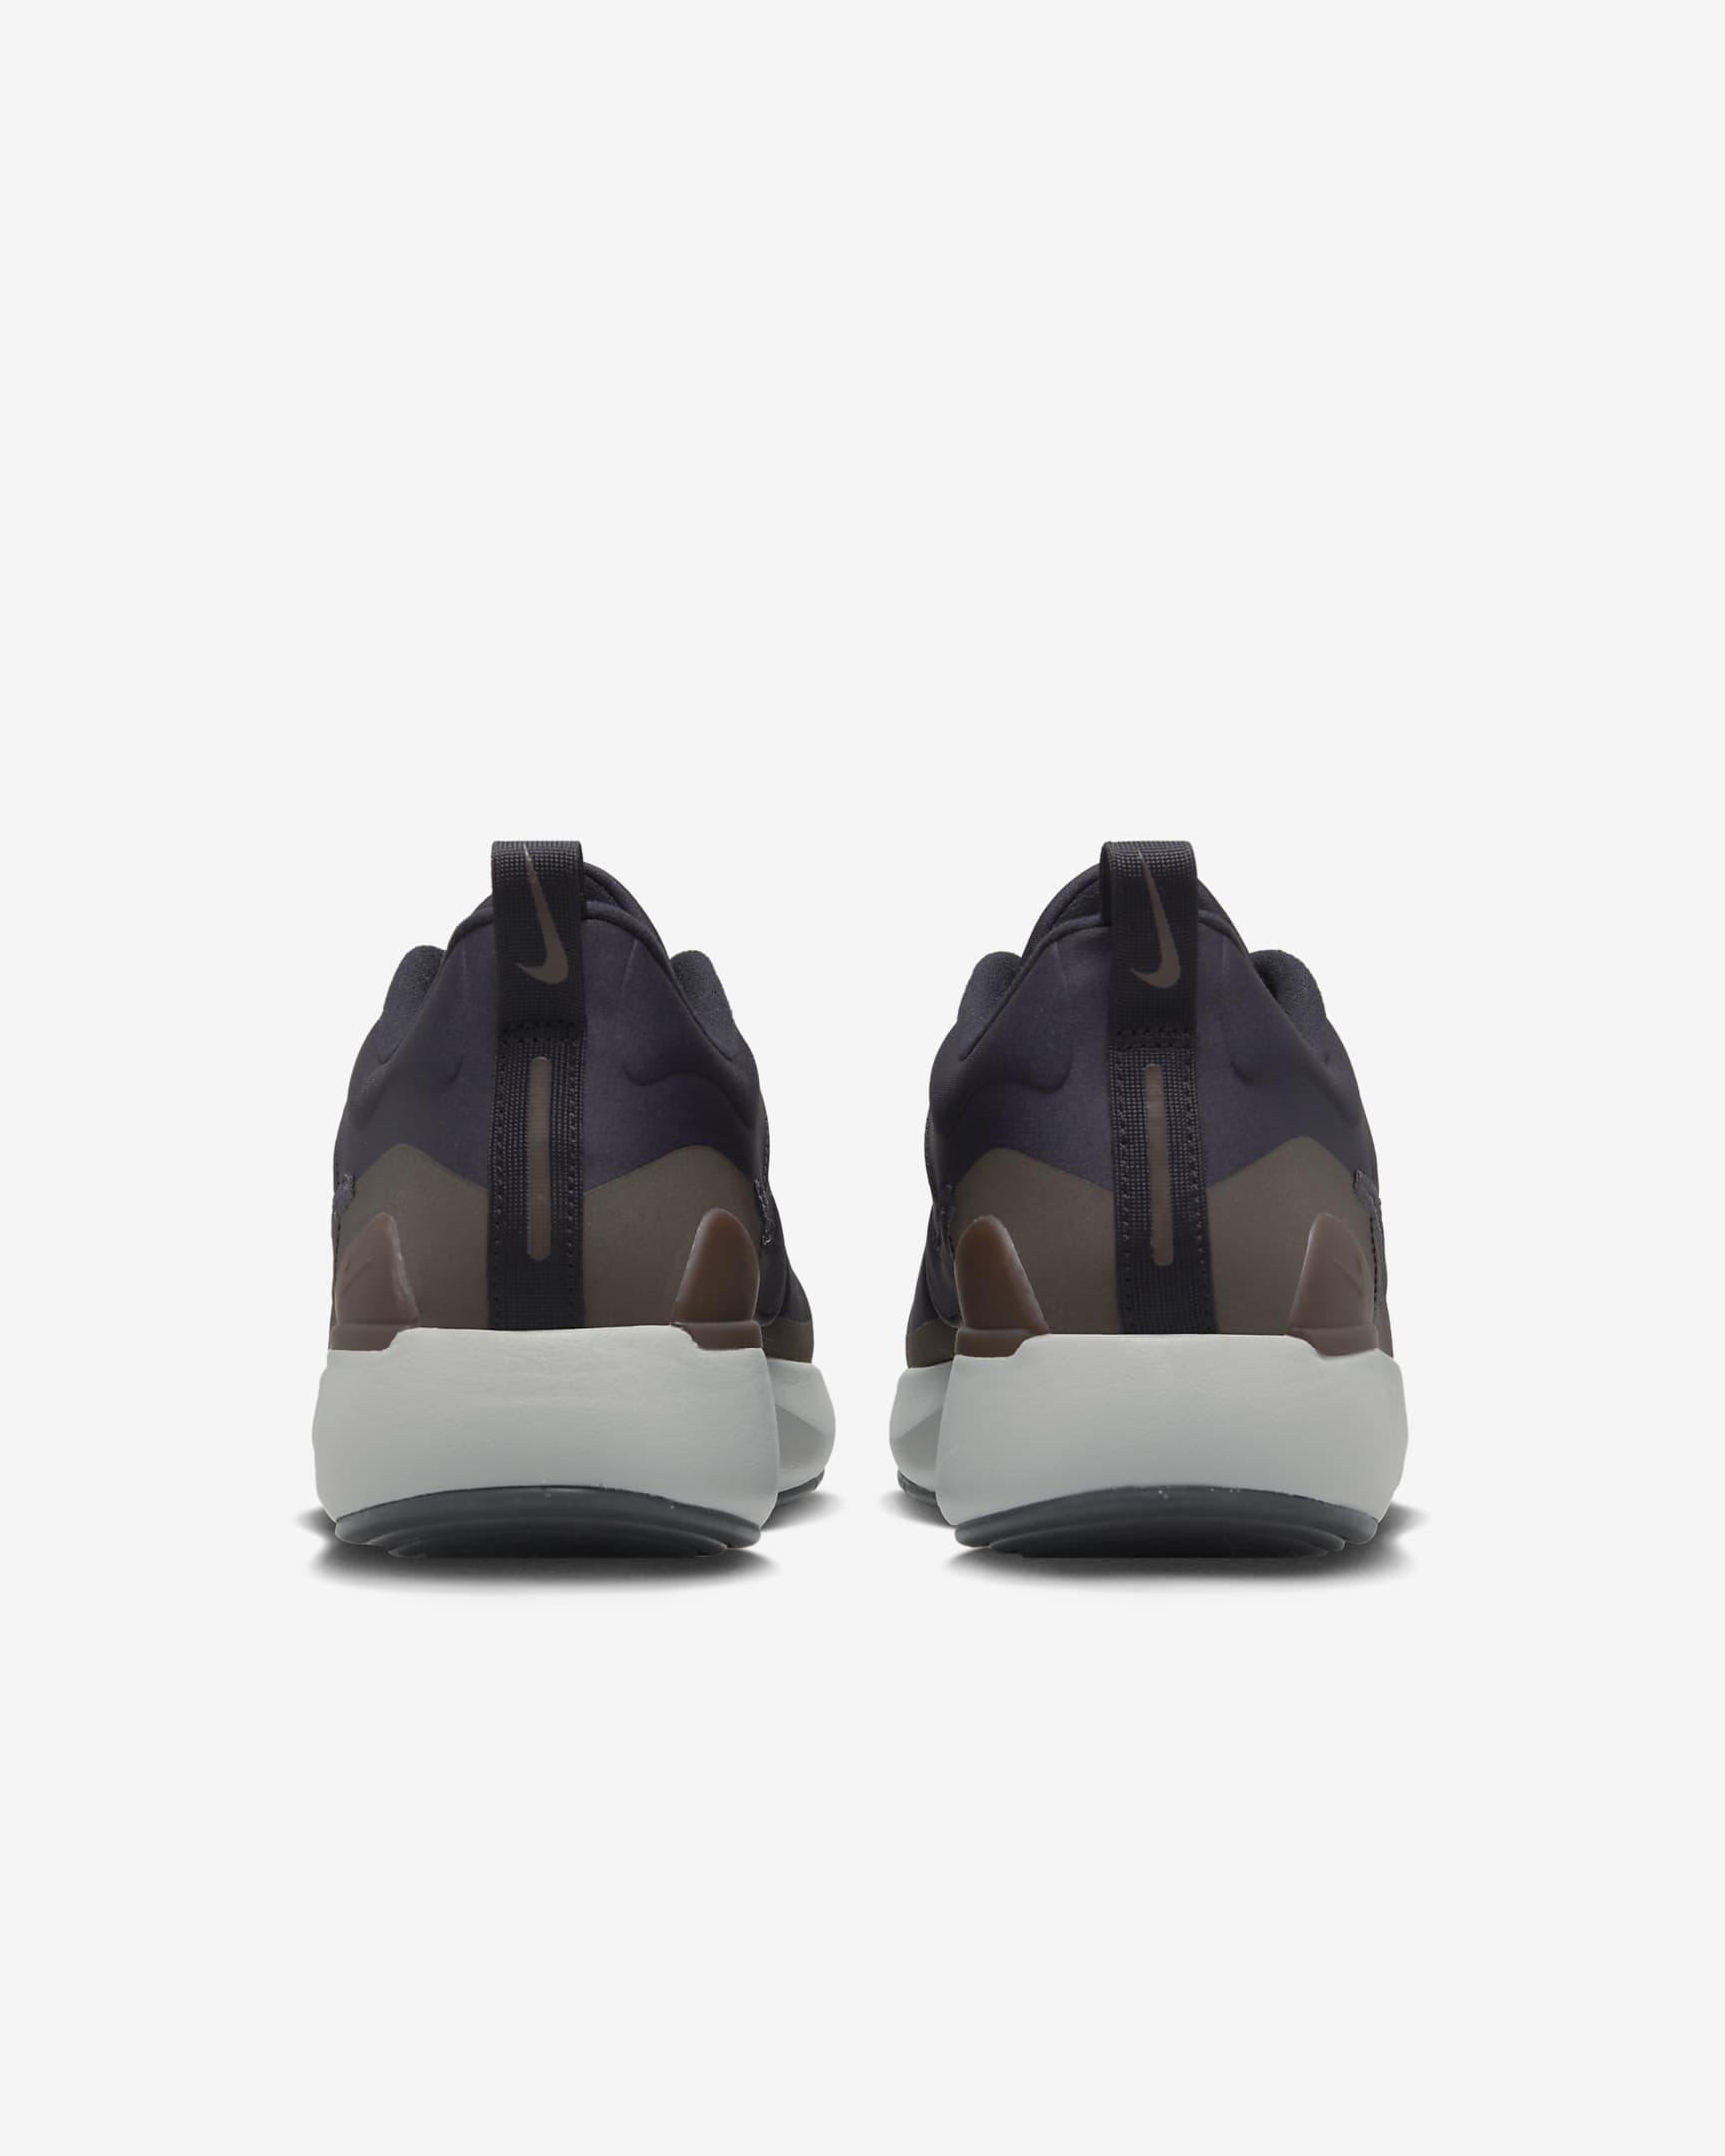 Nike E-Series 1.0 Men's Shoes - Black/Anthracite/Earth/Black